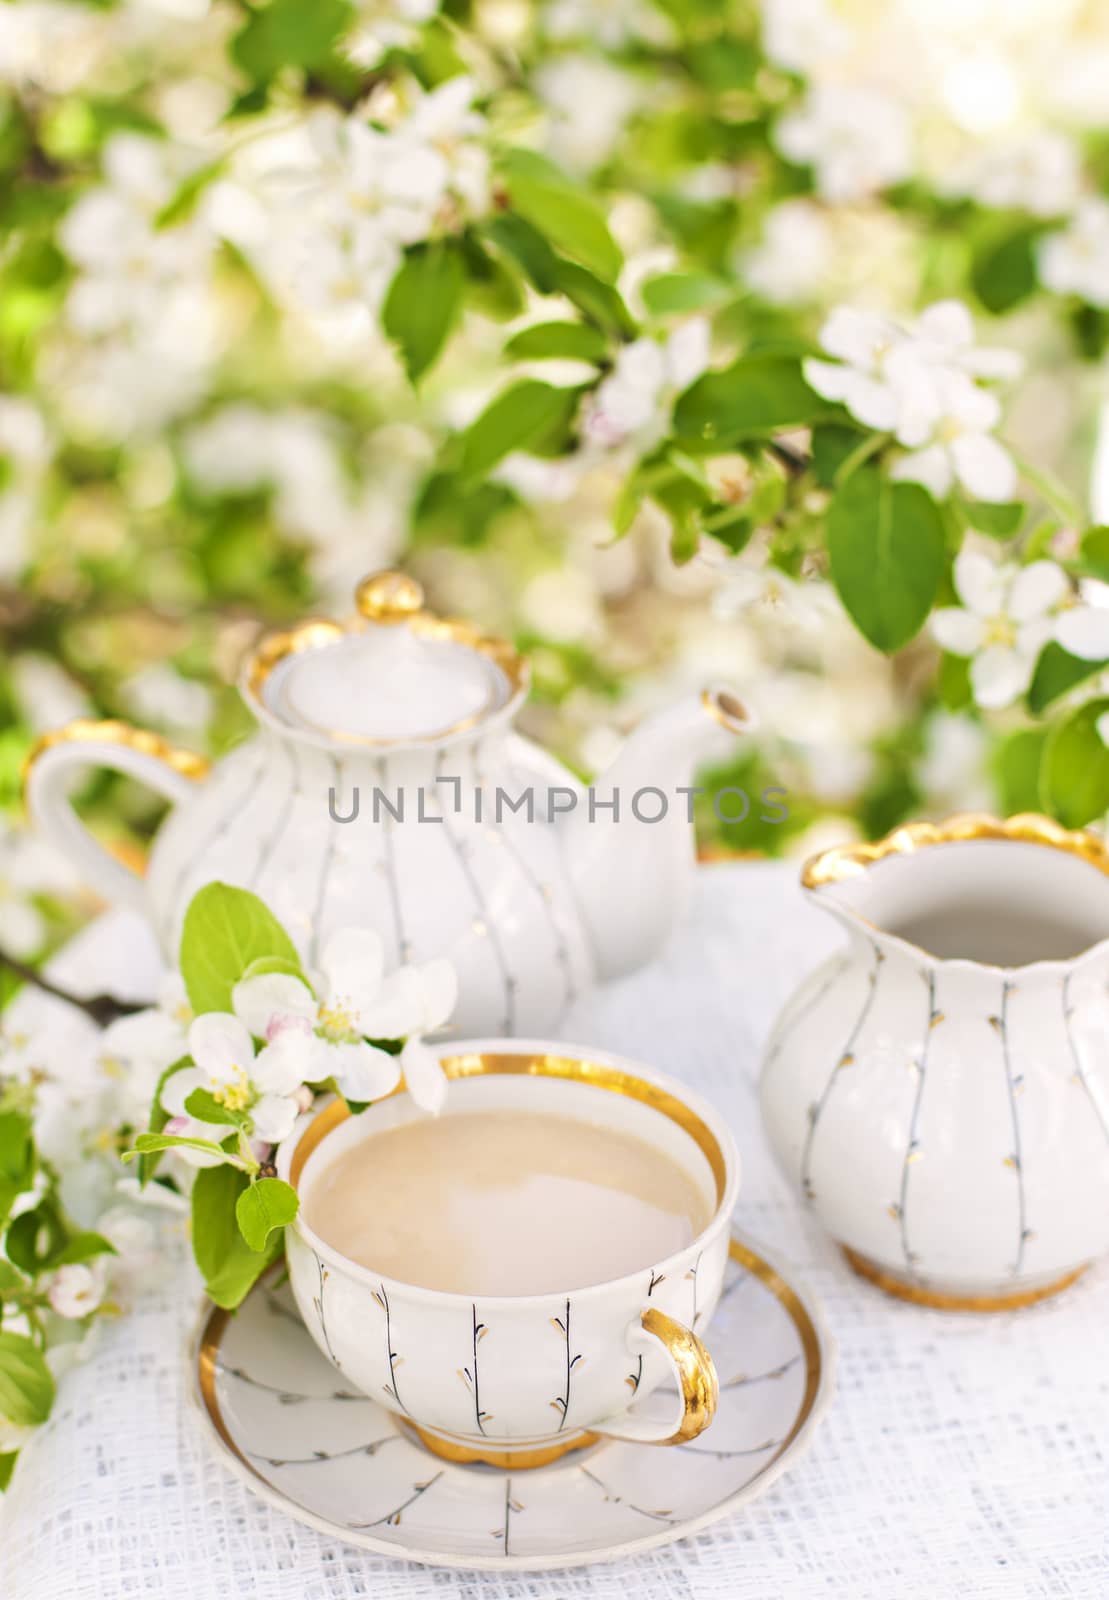 English tea by mariakomar